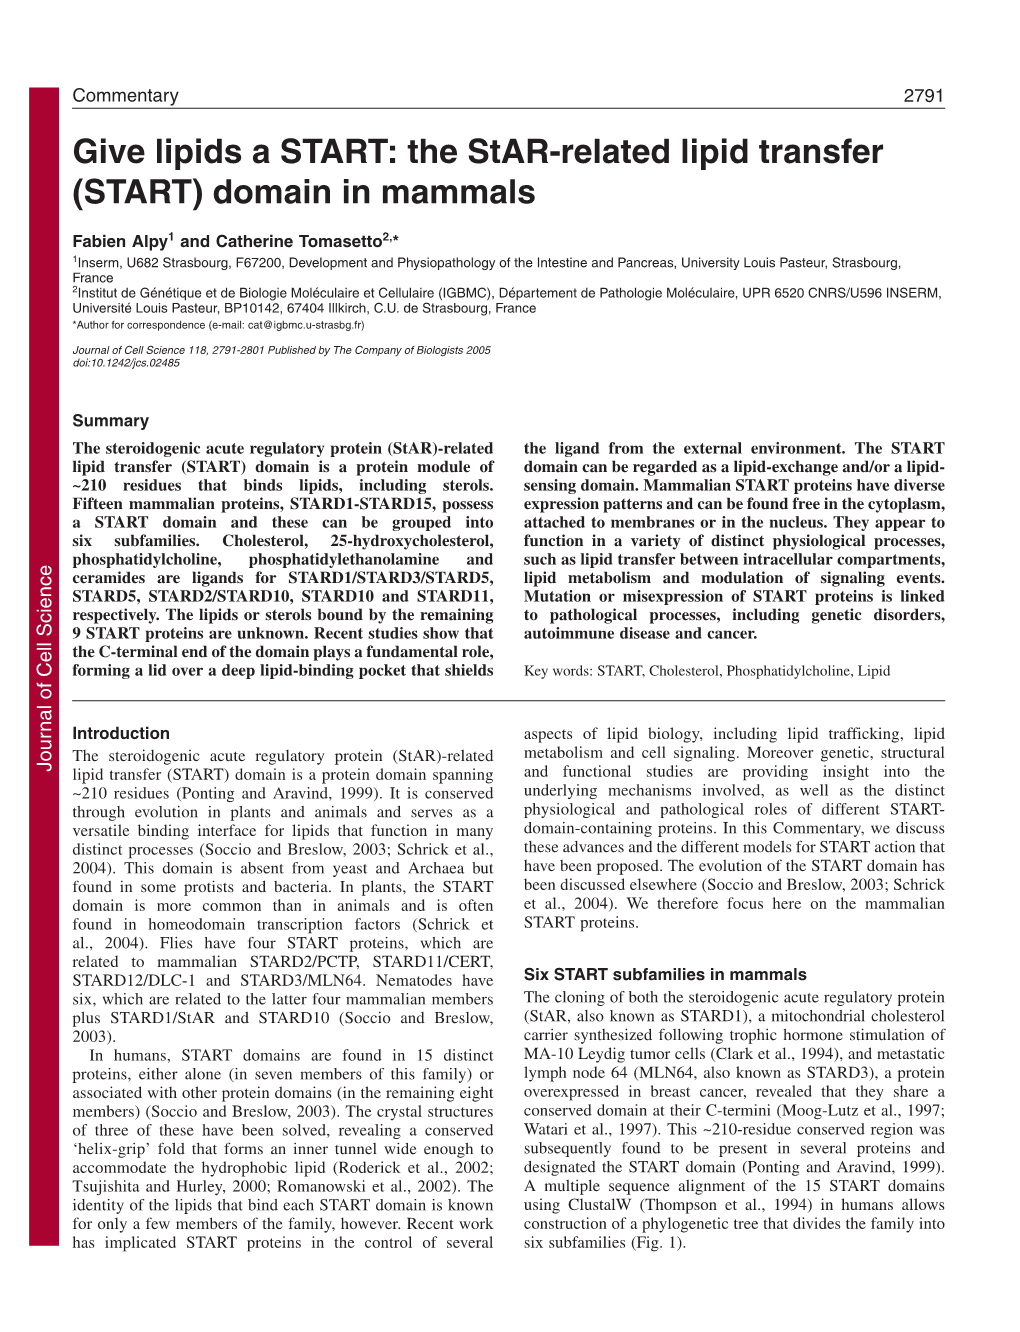 Give Lipids a START: the Star-Related Lipid Transfer (START) Domain in Mammals